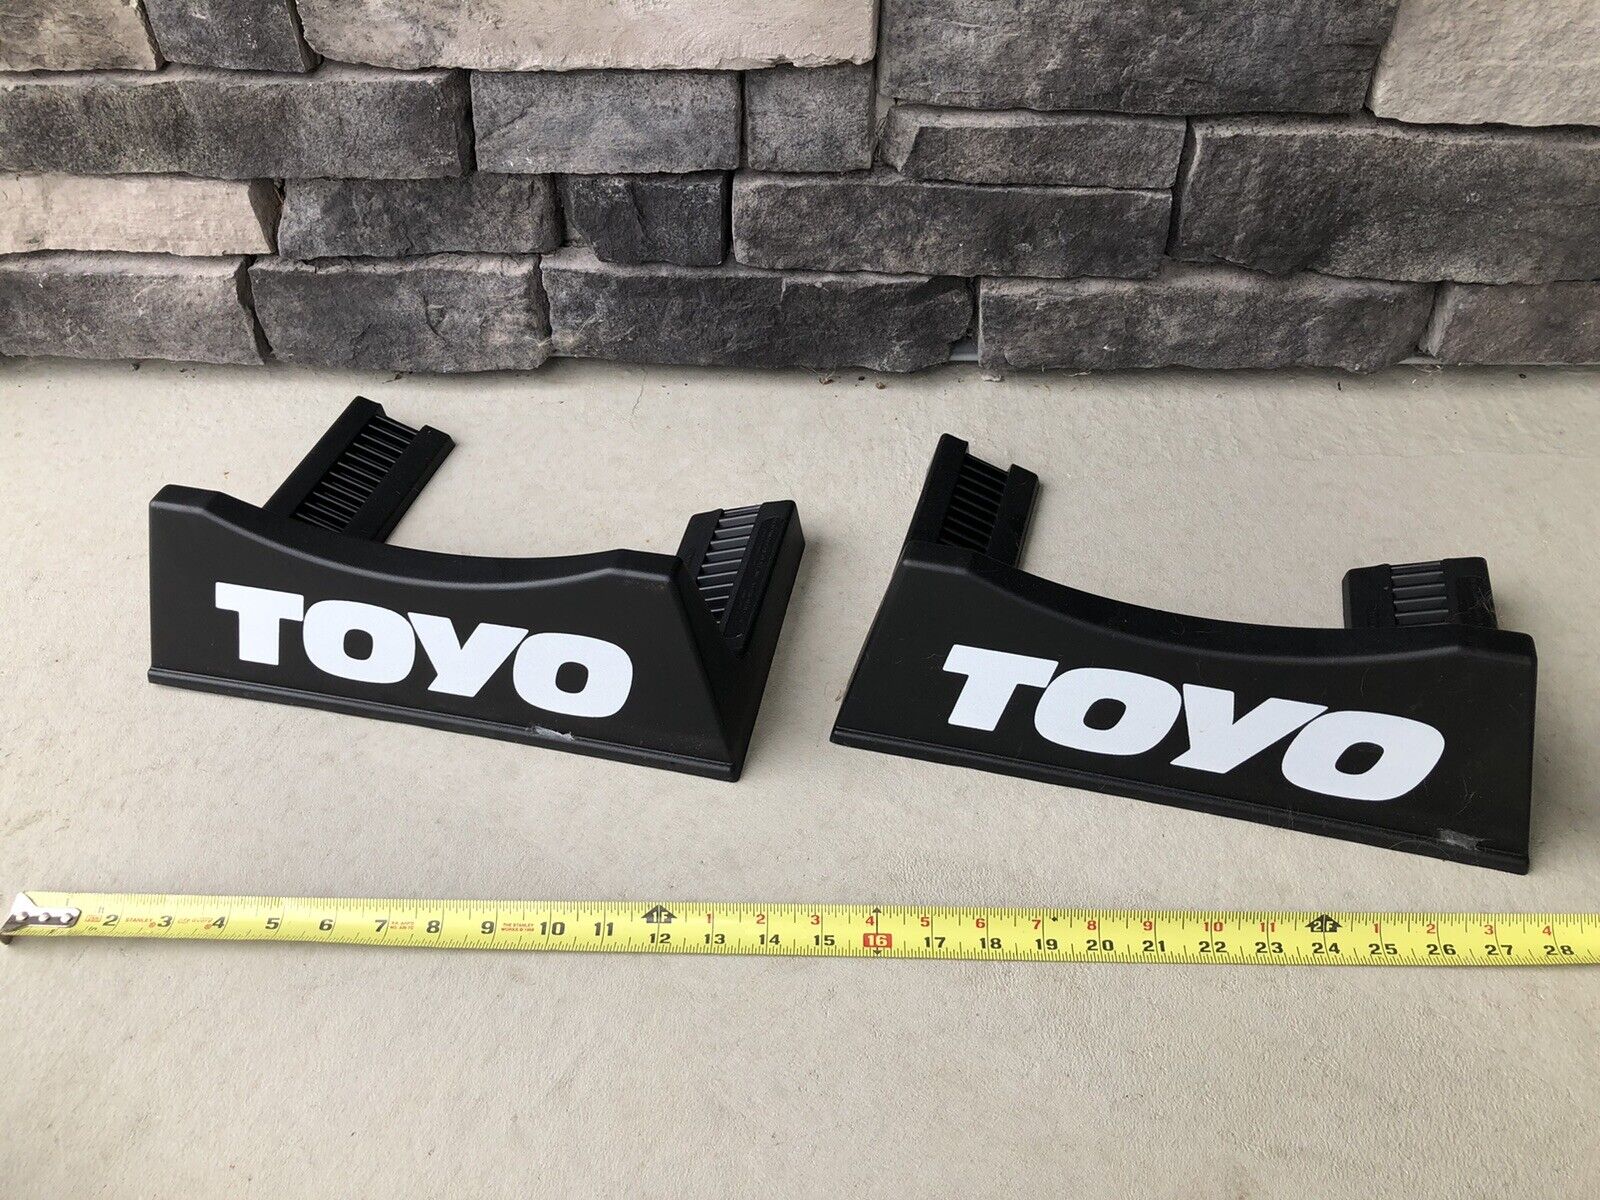 Toyo TIRES DISPLAY STAND Advertising Adjustable Plastic Tire Rack Vintage